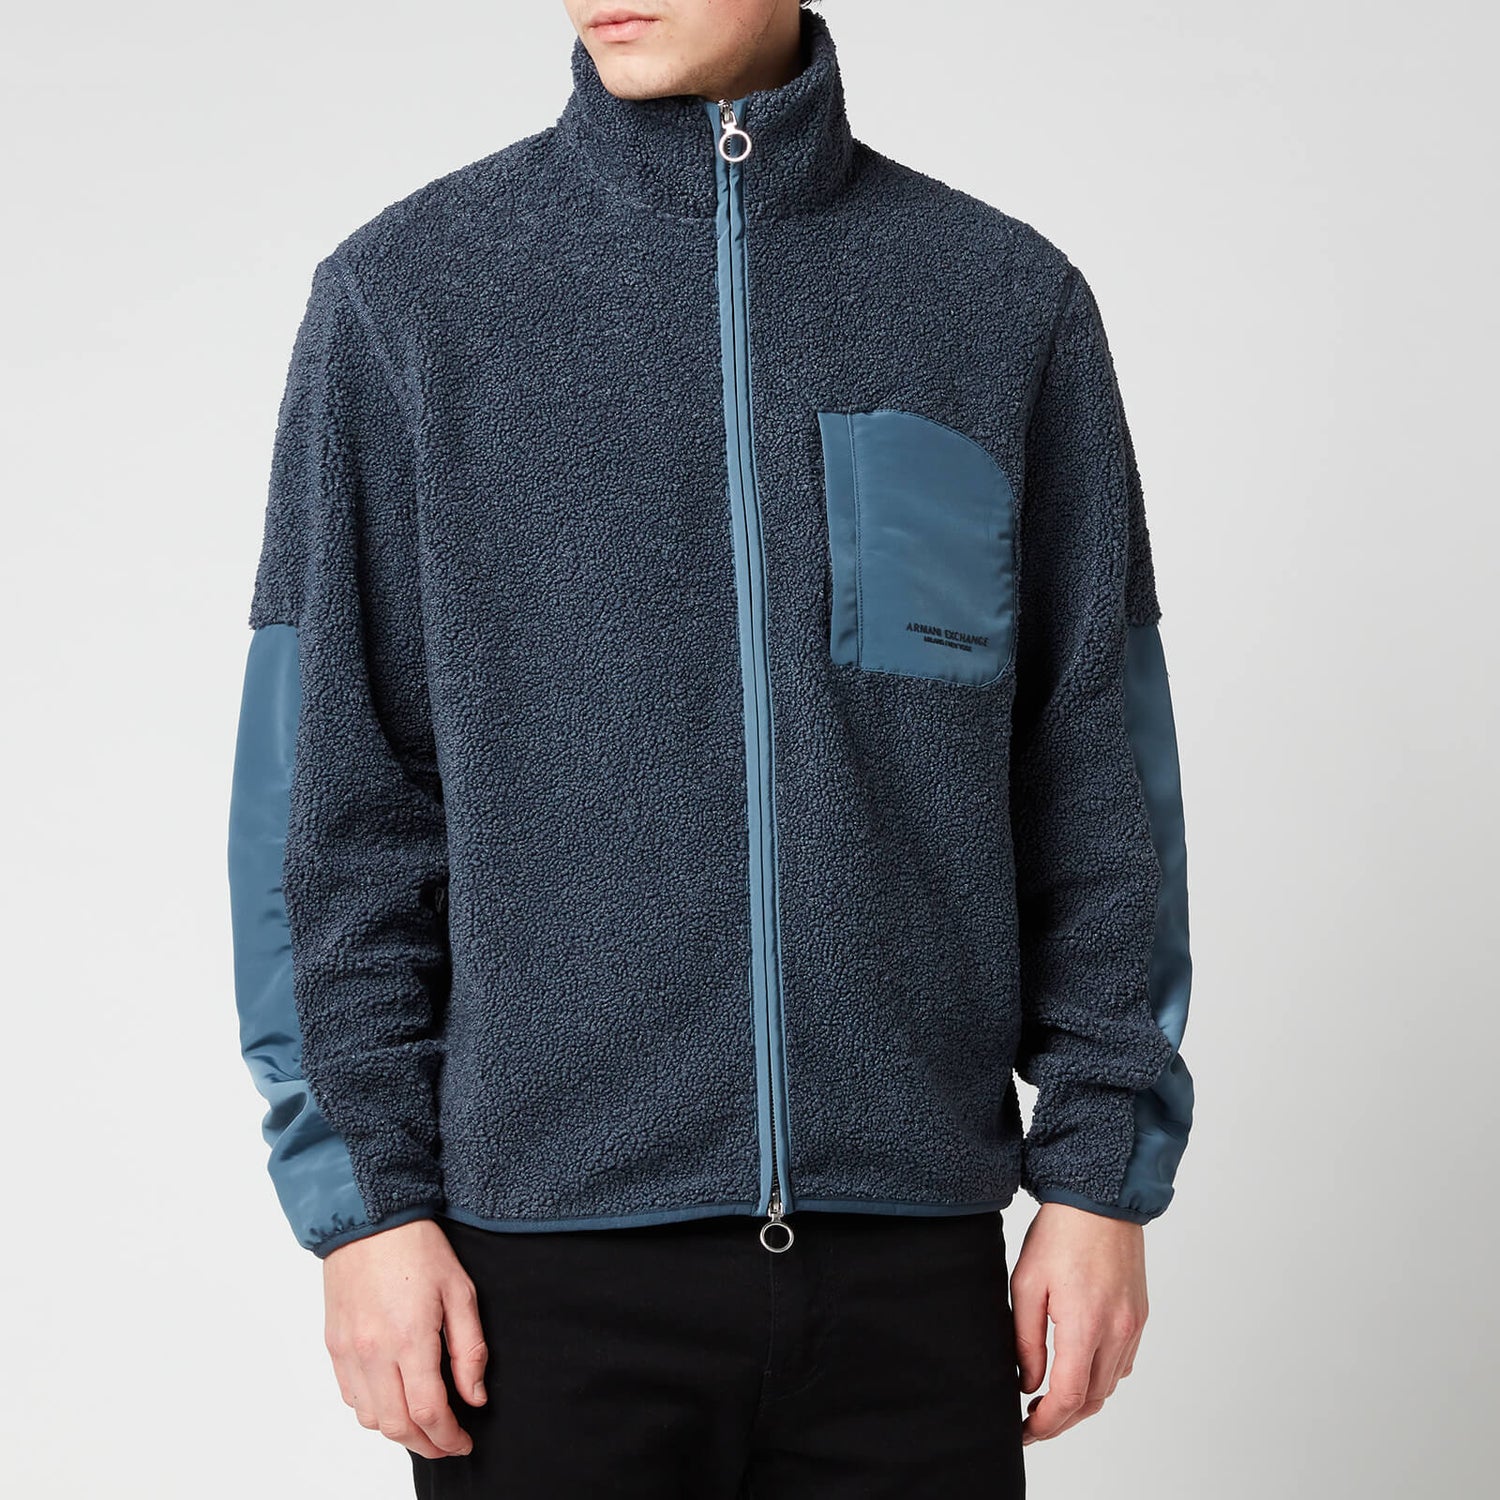 Armani Exchange Men's Fleece Zipped Jacket - Dusty Blue